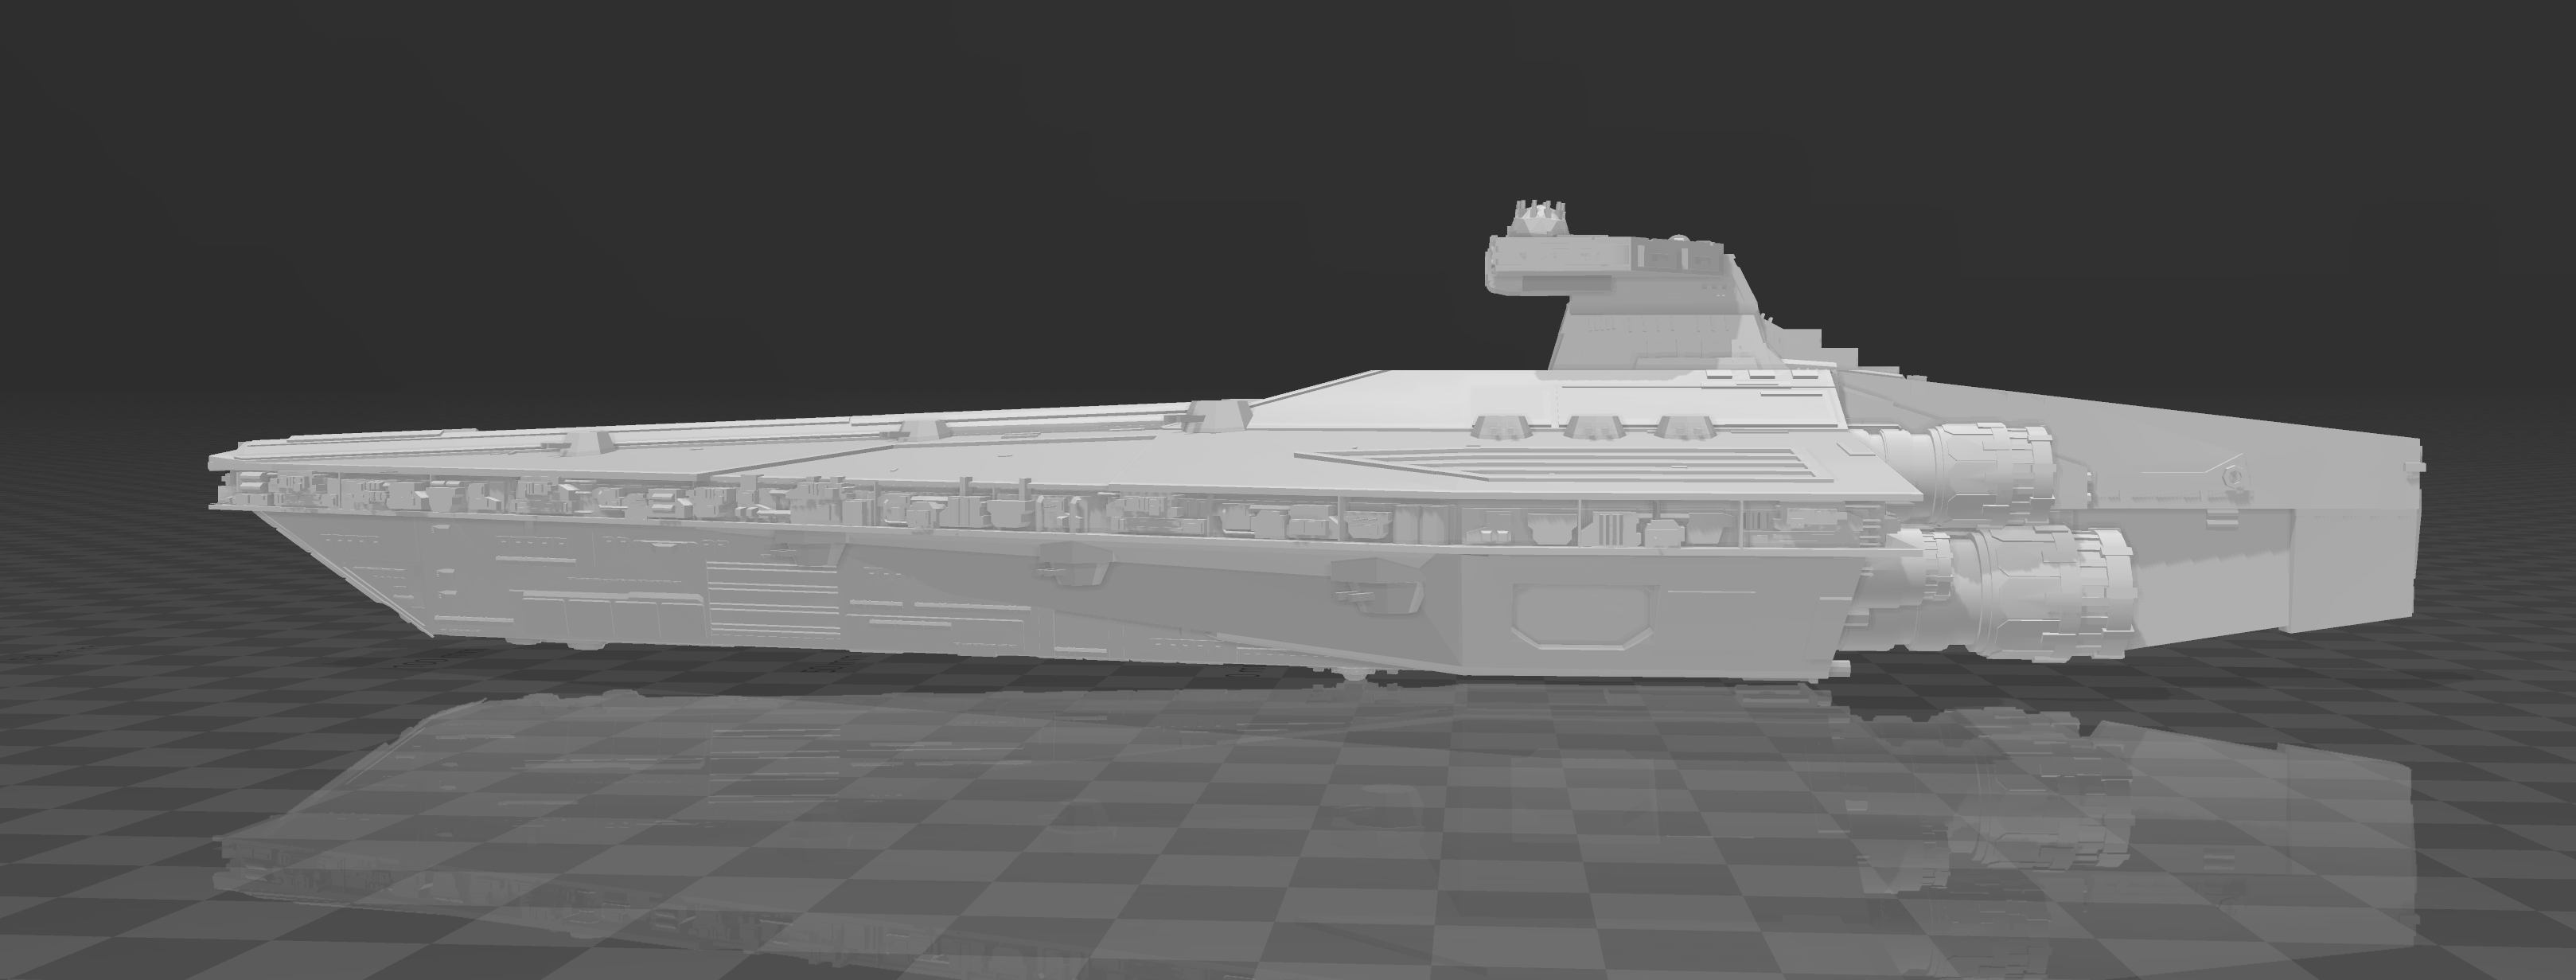 Star Wars Armada Judicial class Heavy Cruiser